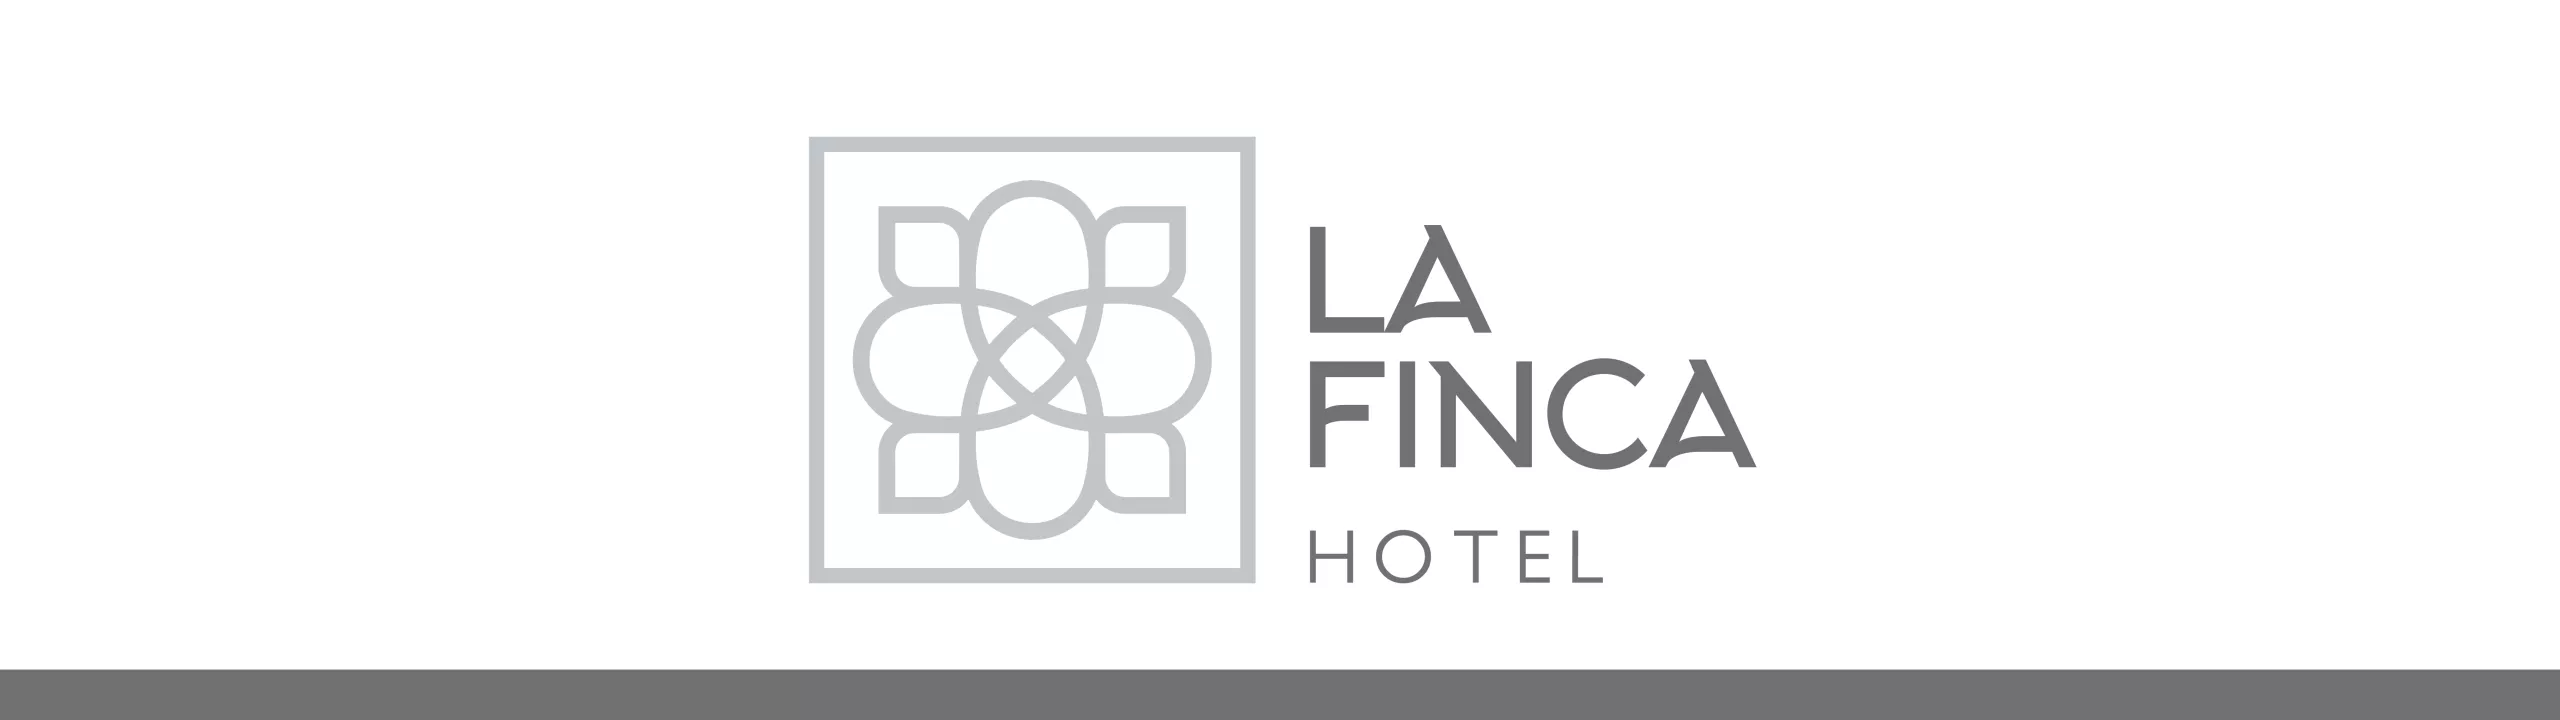 Carta Hotel La Finca